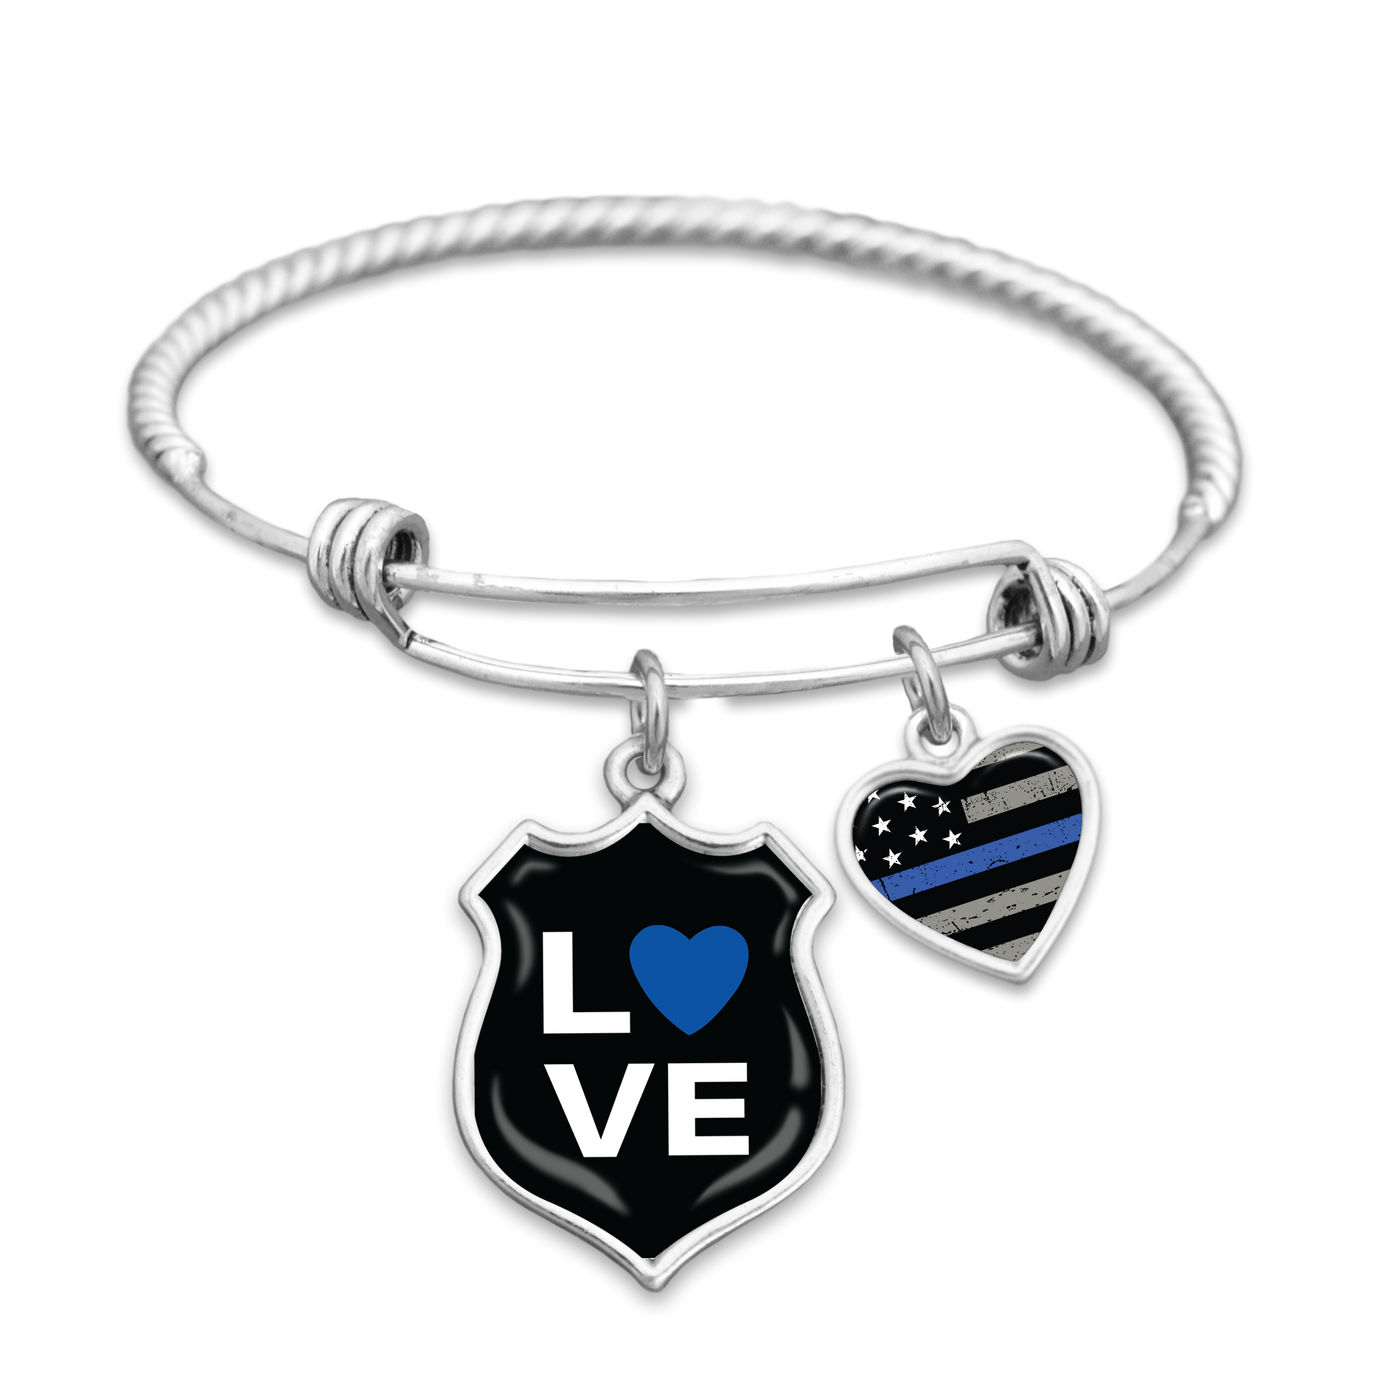 LOVE Thin Blue Line Police Charm Bracelet